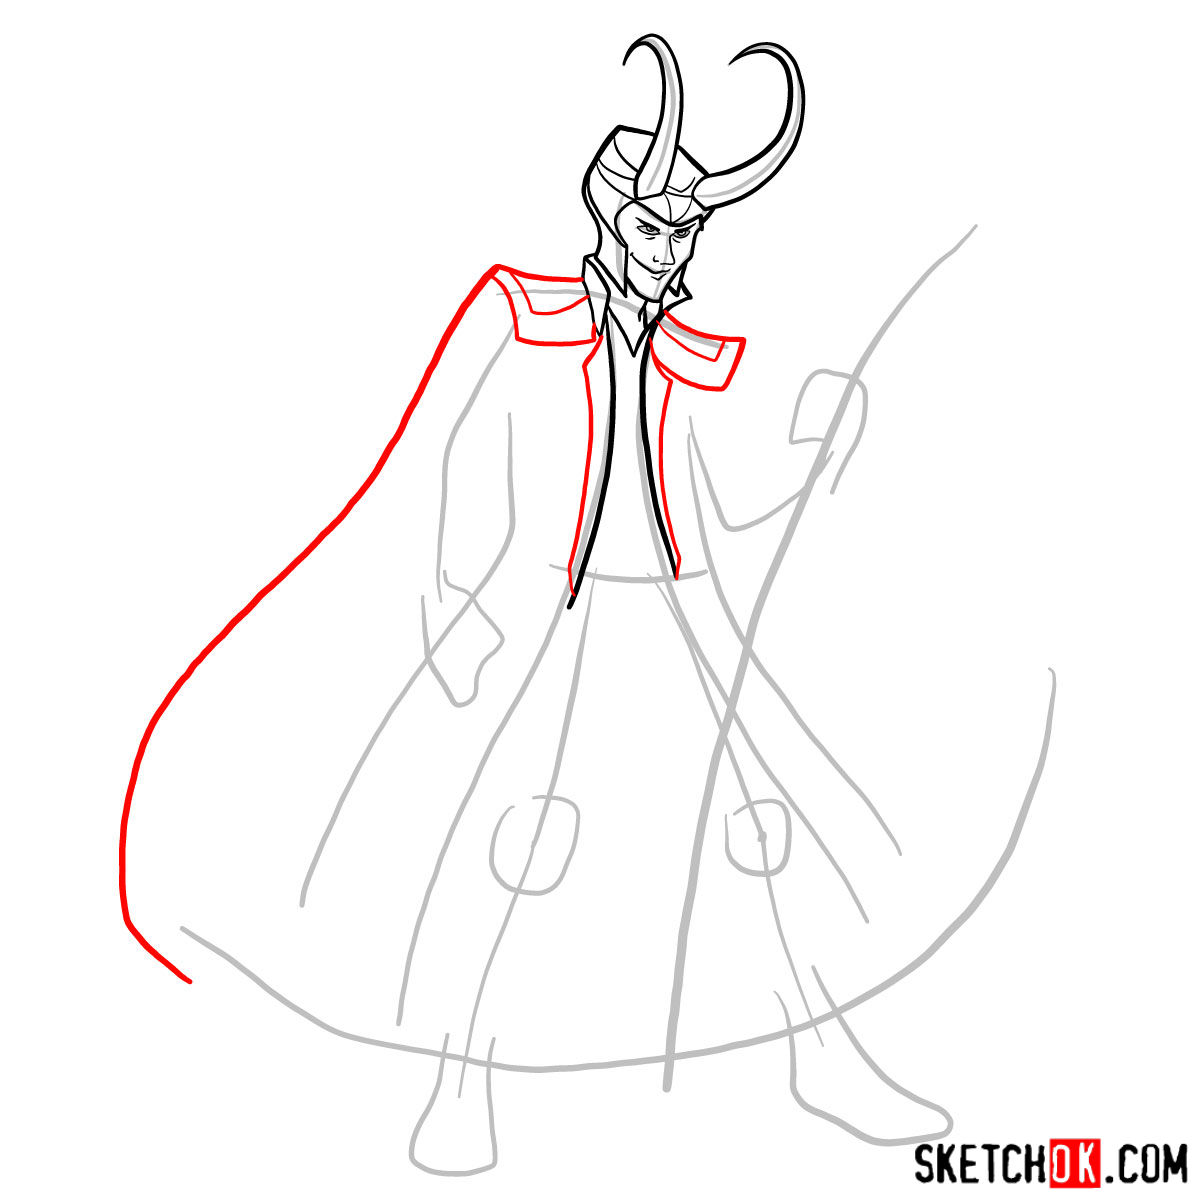 How to draw Loki - Marvel Comics villian - step 07